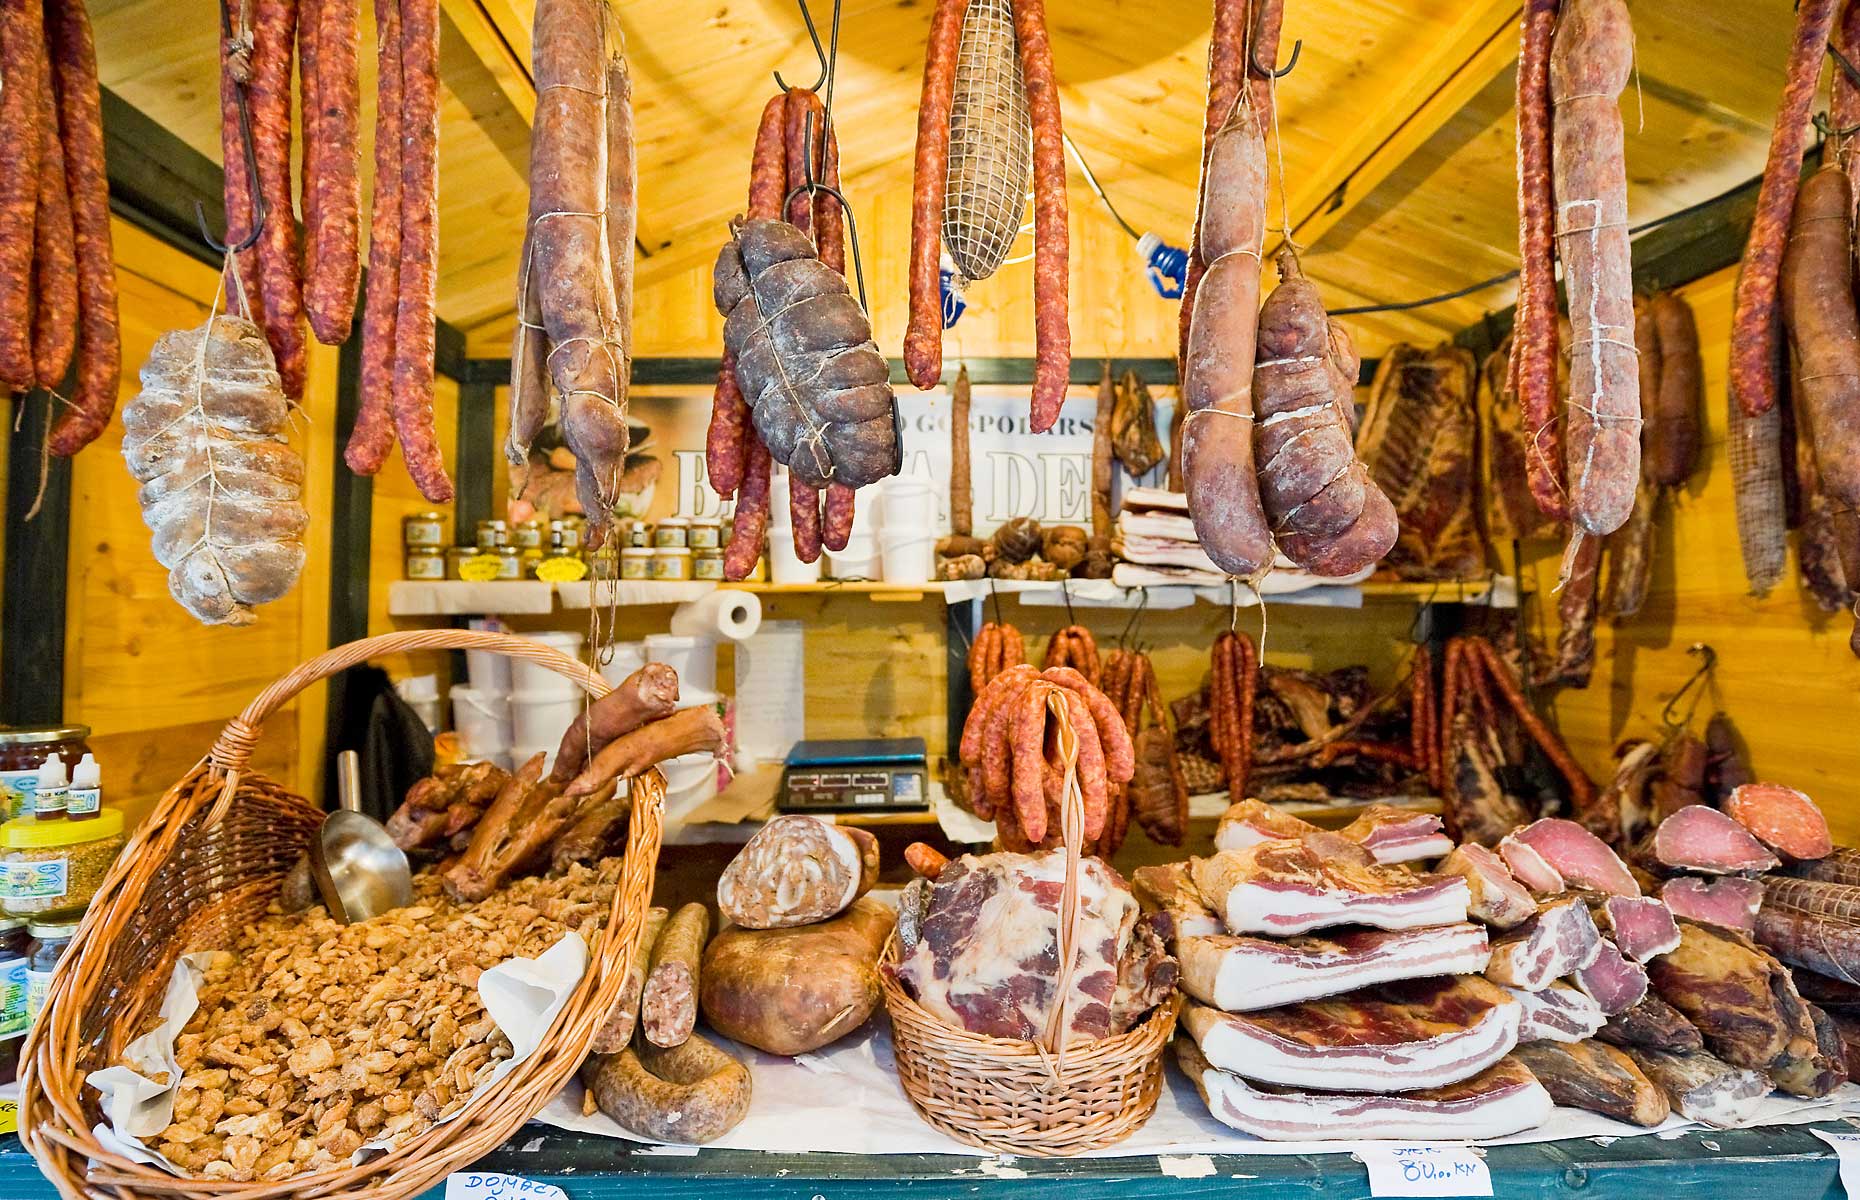 Dried meats in Croatia (Image: copyright Rudolf Abraham)